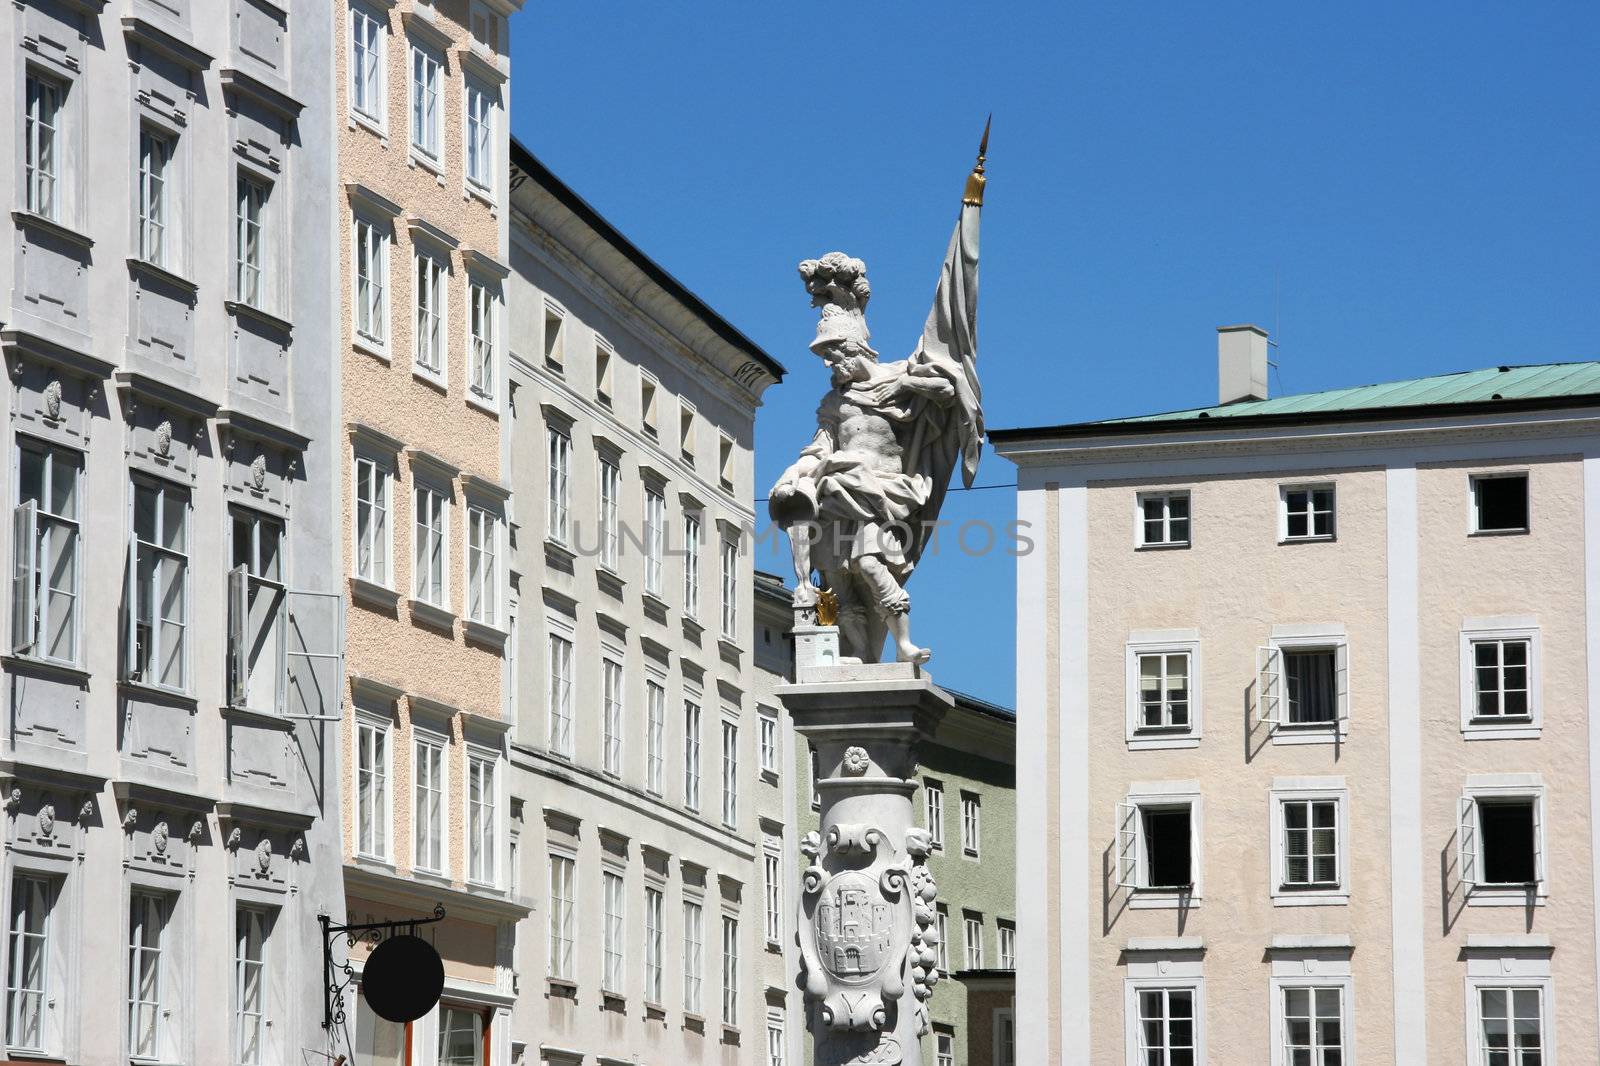 Old town square in Salzburg, Austria. Saint Florian statue.